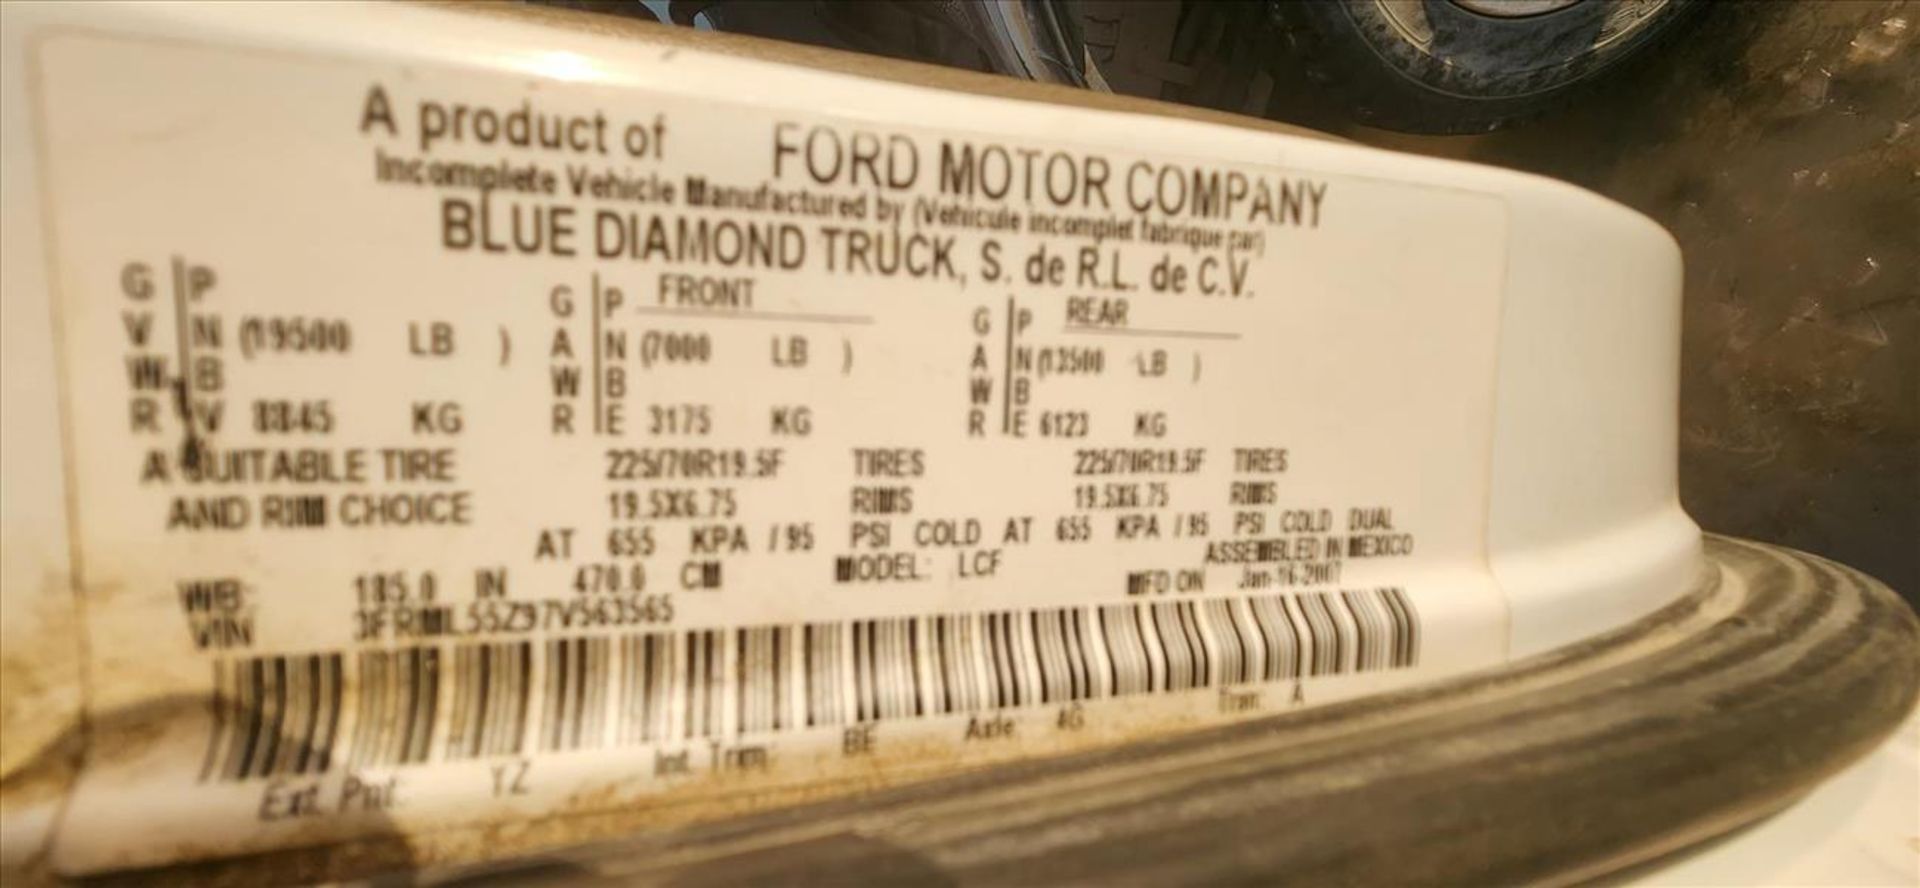 Ford box truck, PowerStroke 4.5 L V6 diesel eng., mod. LCF, VIN 3FRML55797V563565 (2007), approx. - Image 7 of 9